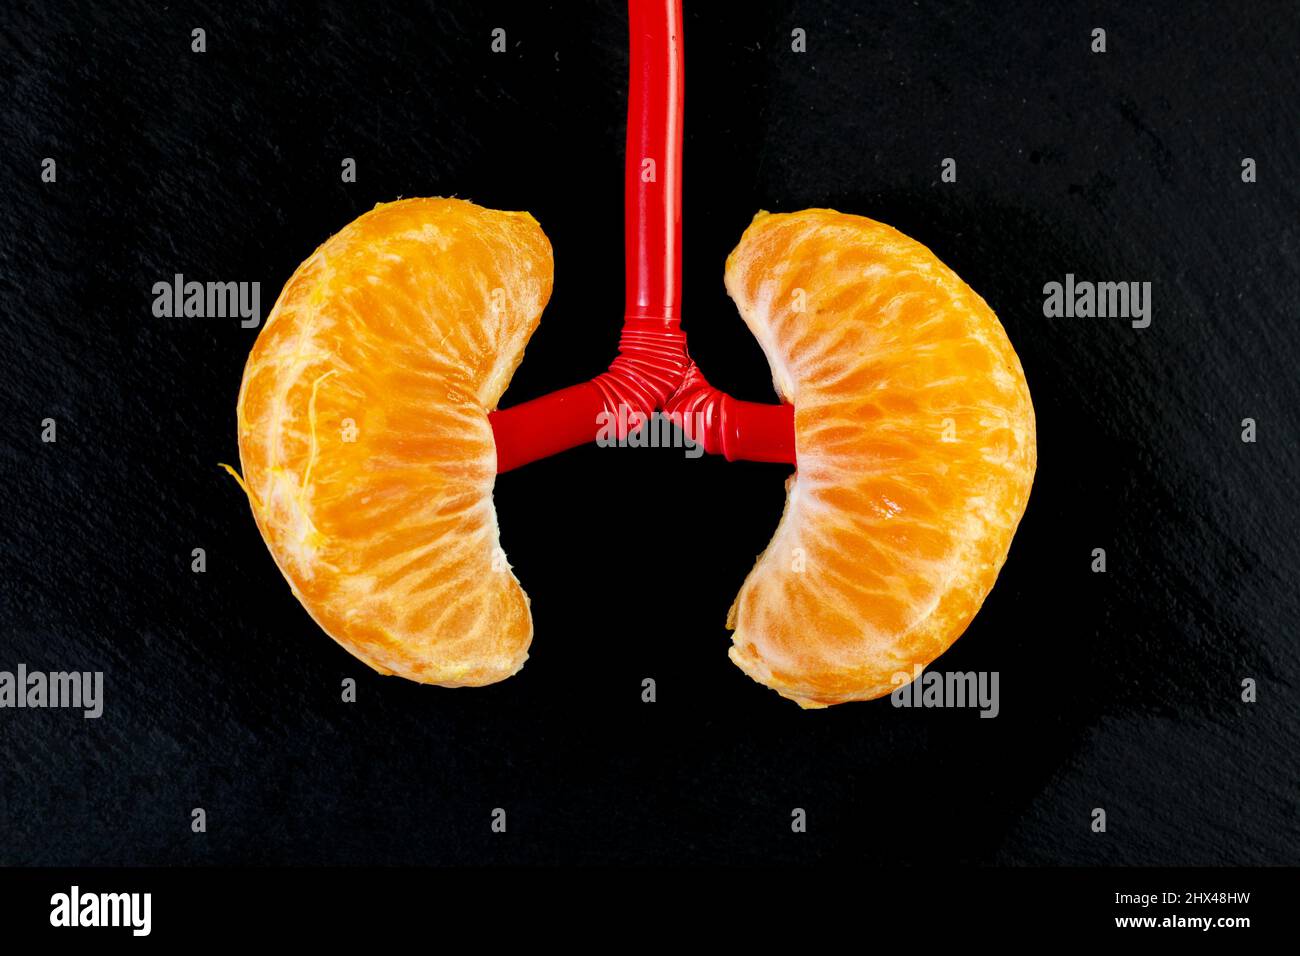 2 mandarin orange wedges representing lungs or kidneys on black background Stock Photo